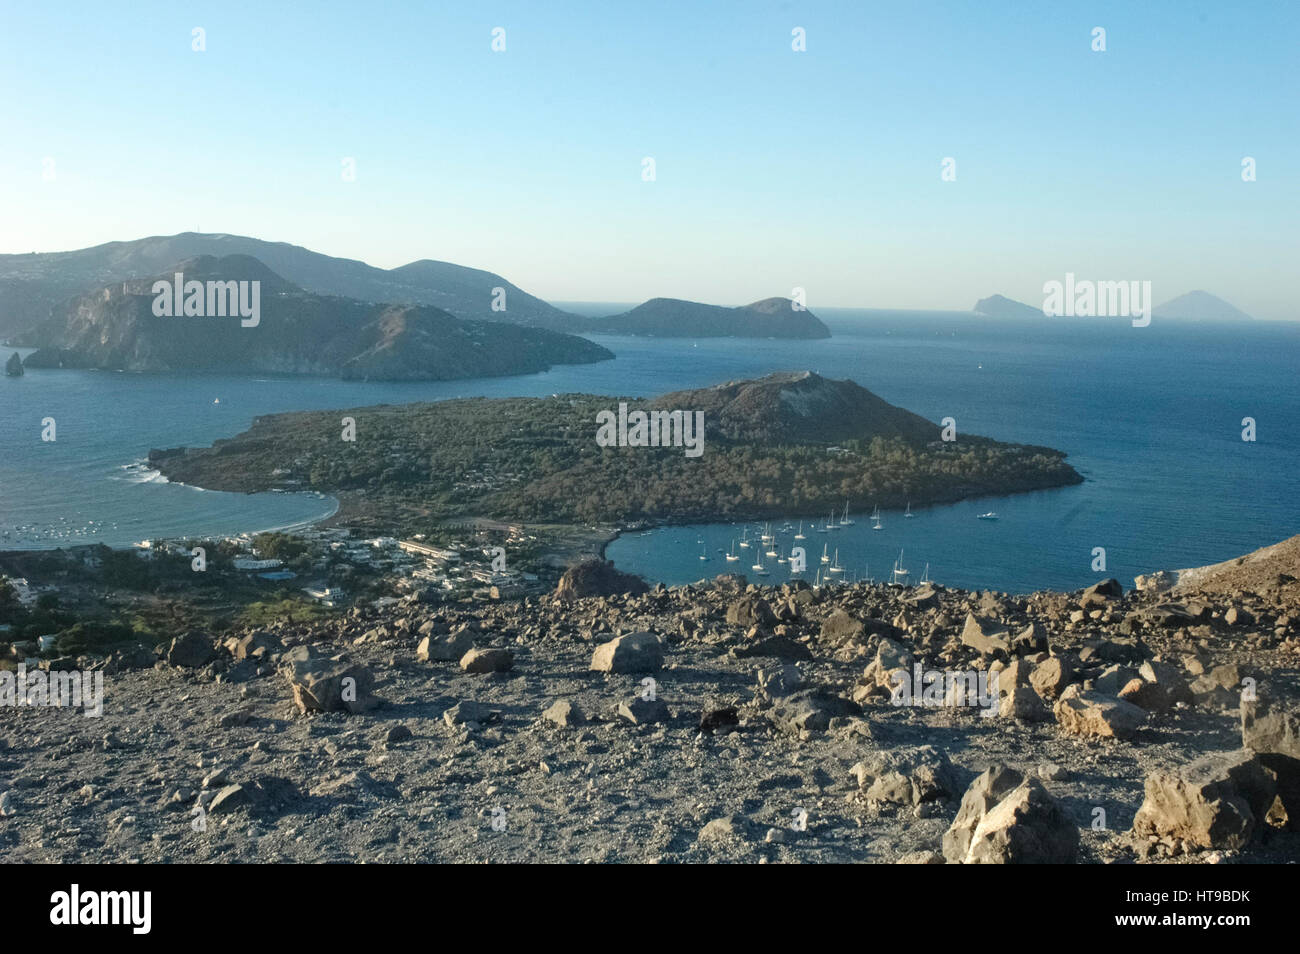 View of amazing scenery of the Aeolian Islands Stock Photo